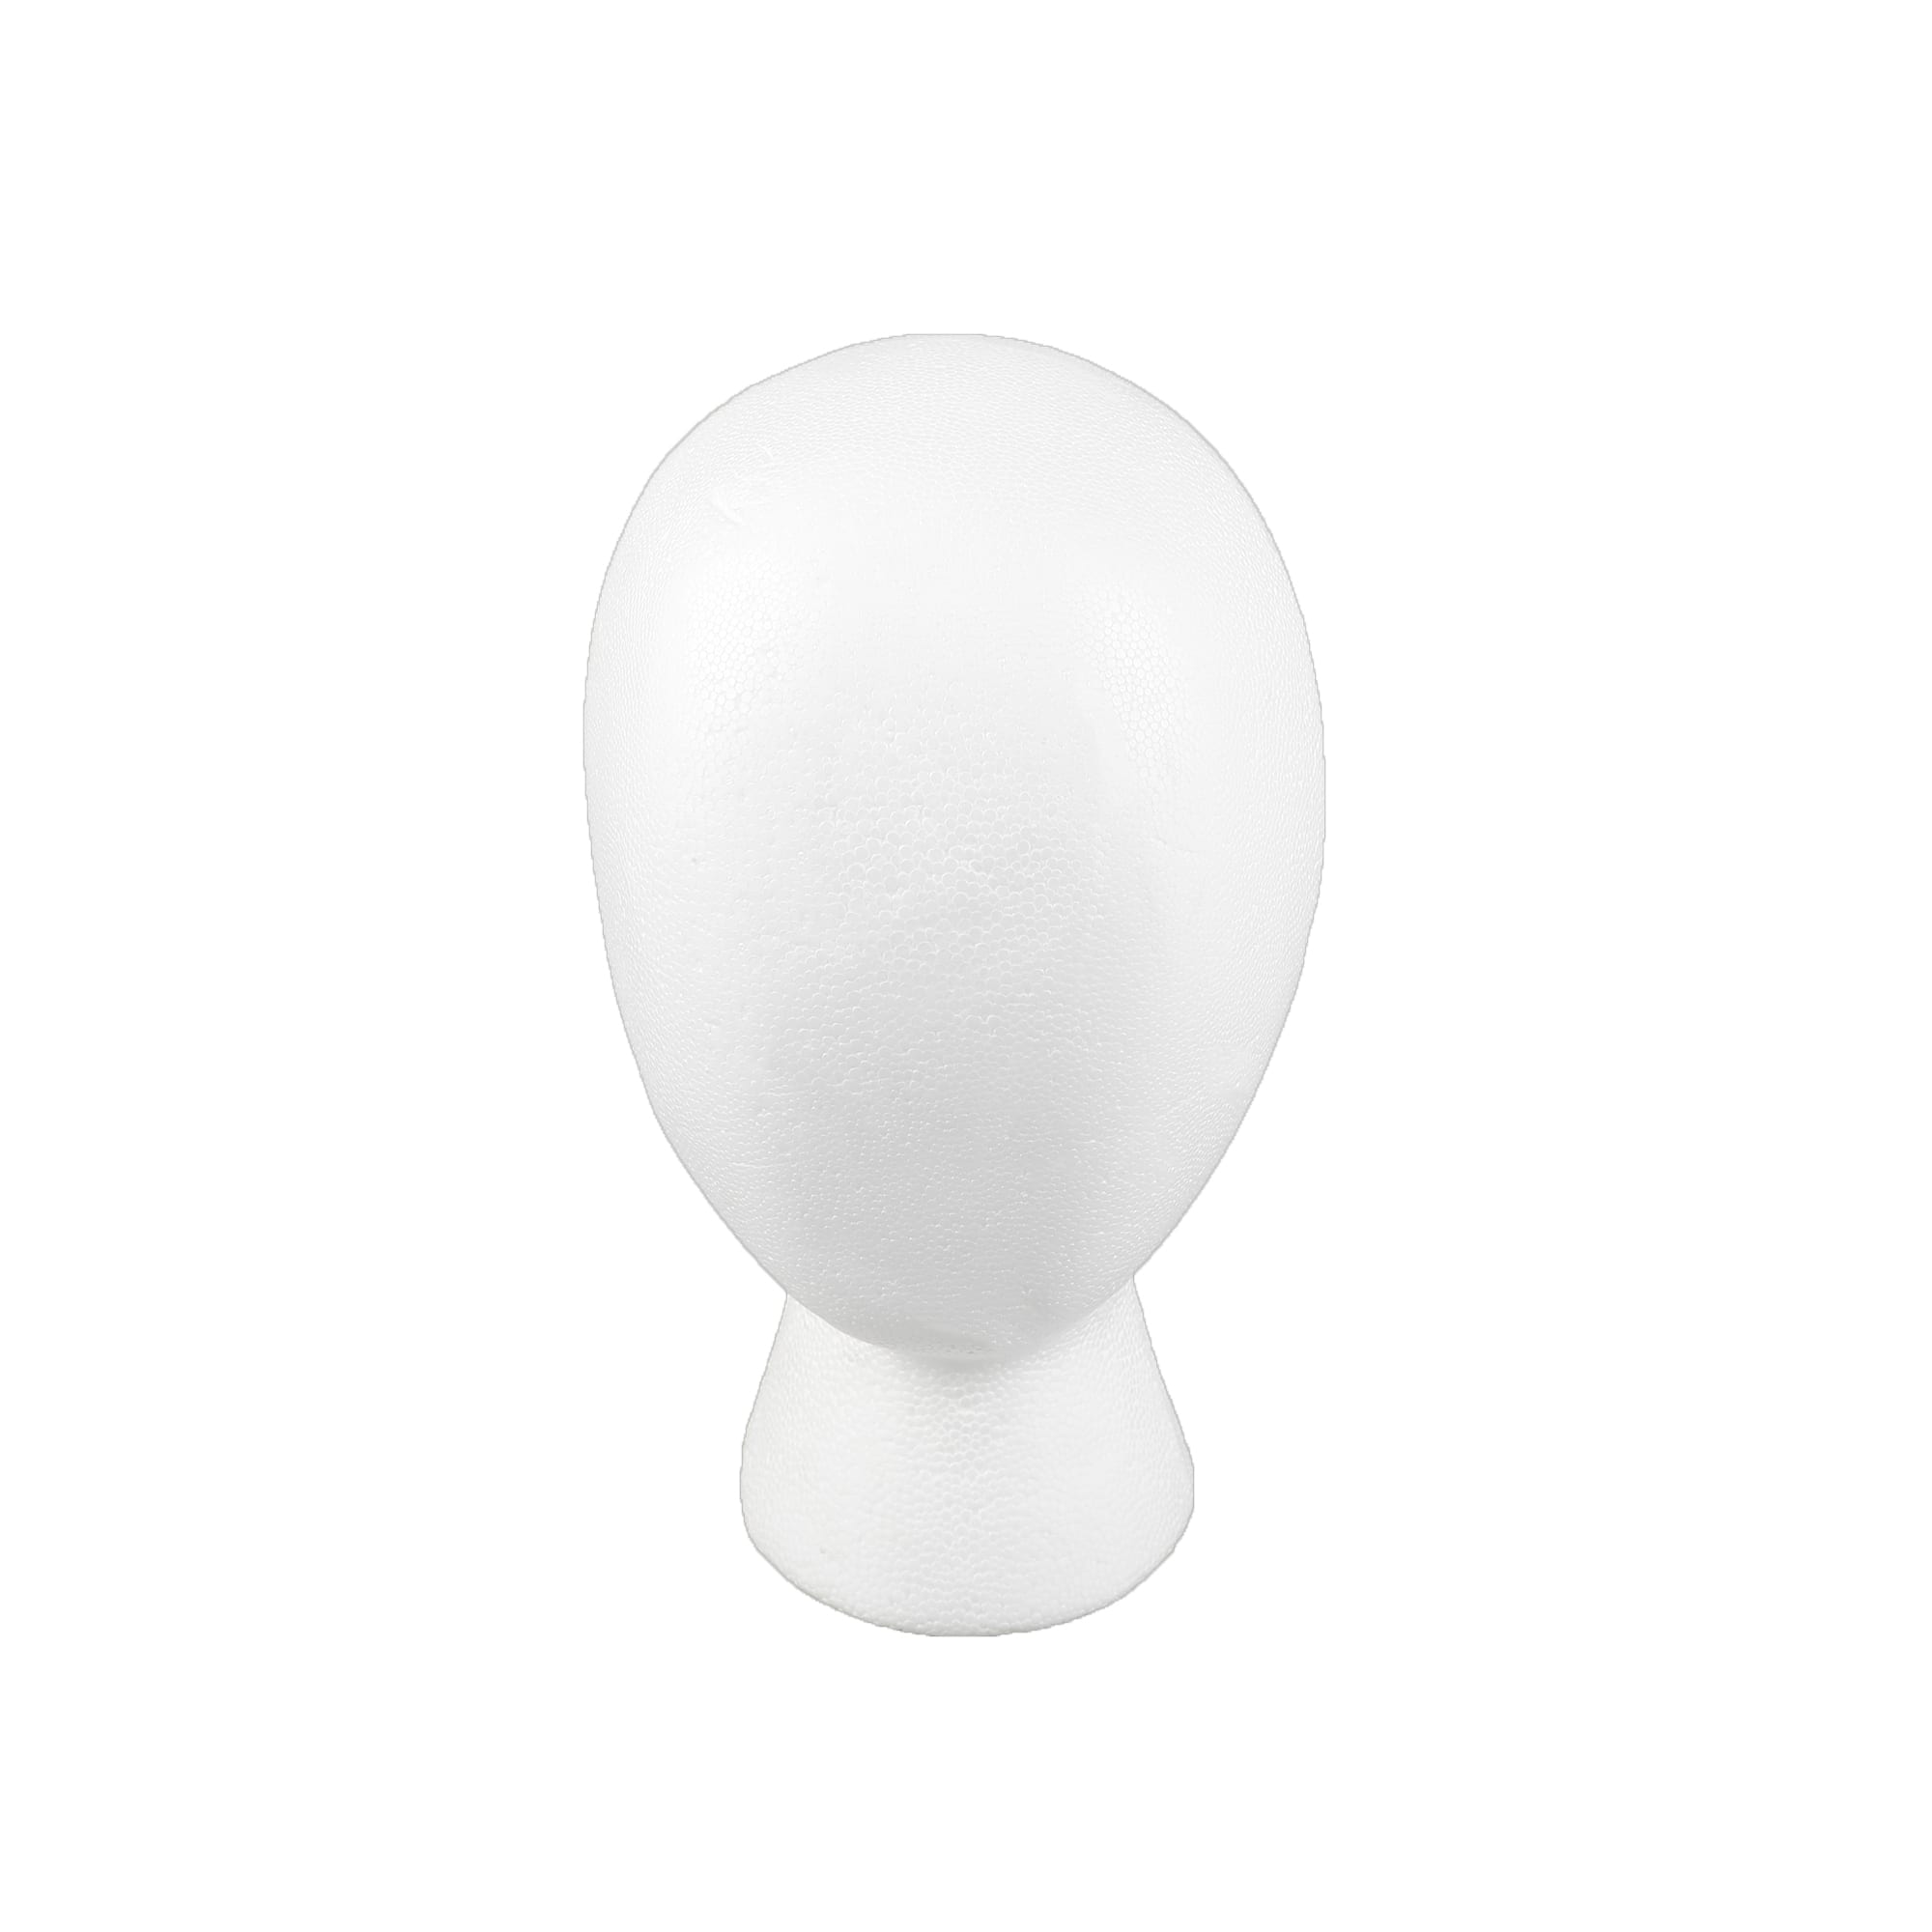 White Foam Male Head by Ashland®